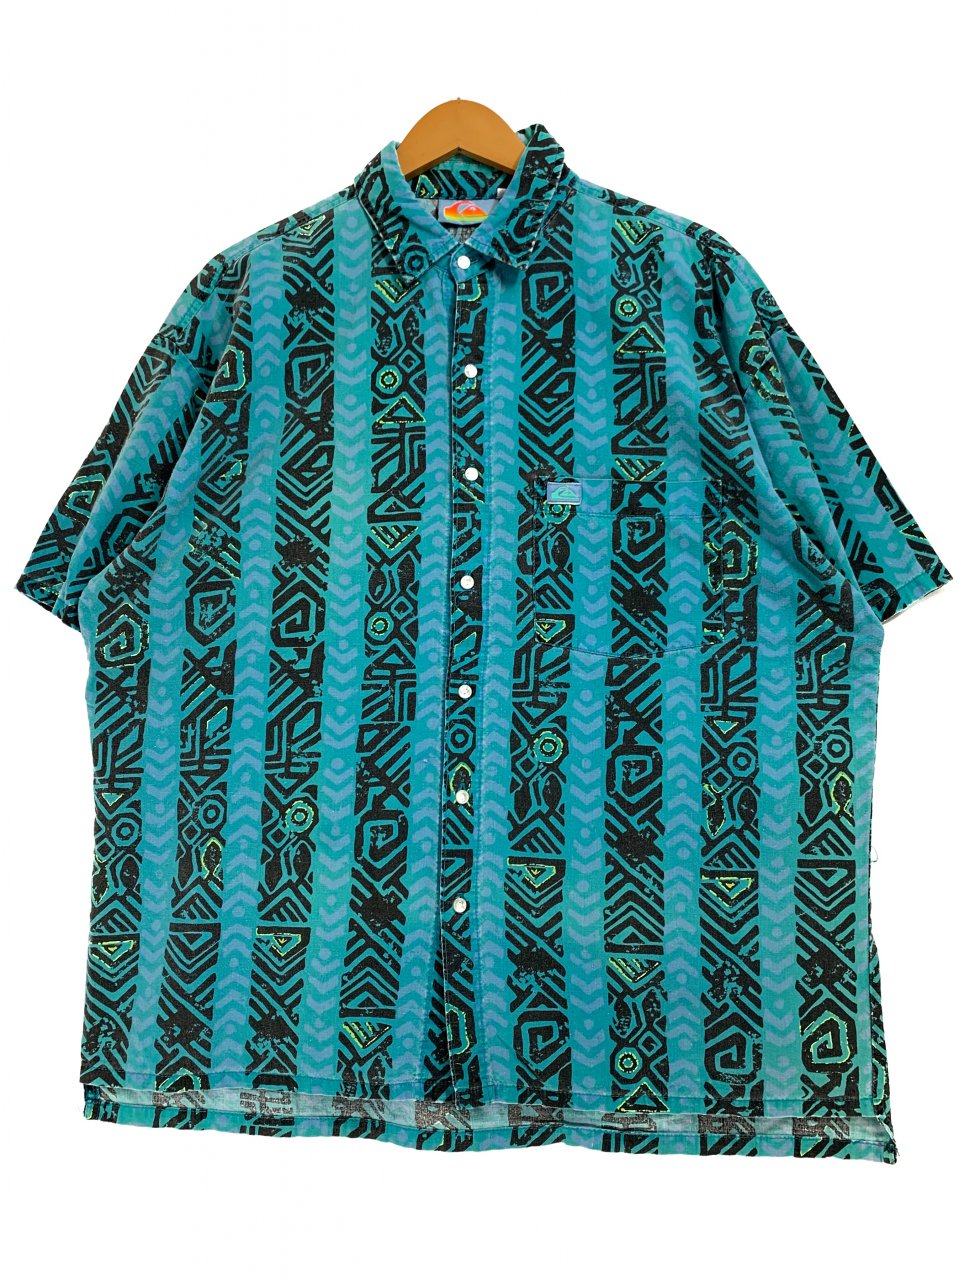 USA製 90s QUIKSILVER Cotton Stripe S/S Shirts エメラルド M